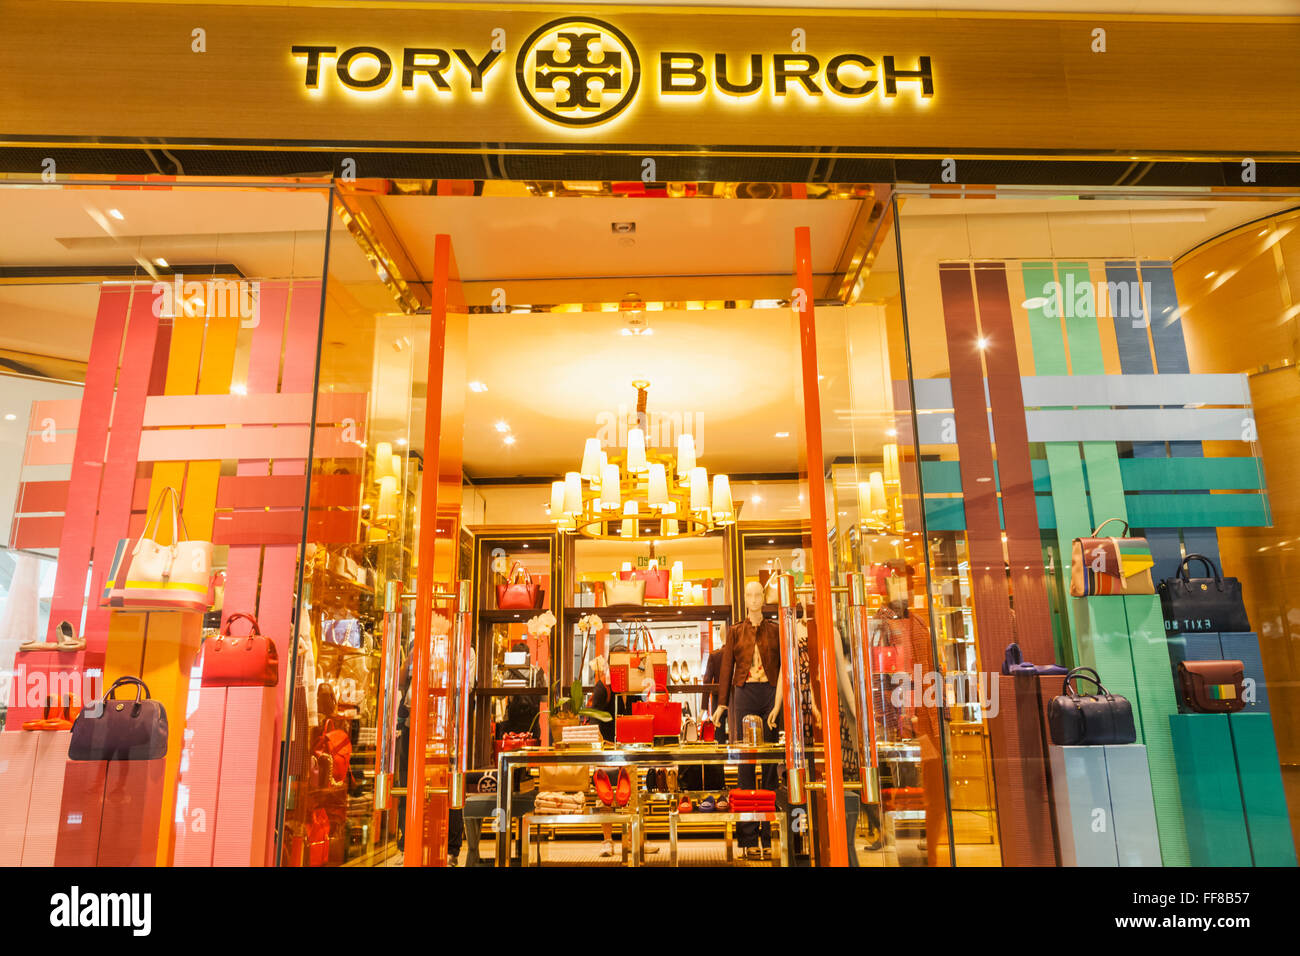 China, Hong Kong, Central, IFC Shopping Mall, Tory Burch Store Stock Photo  - Alamy